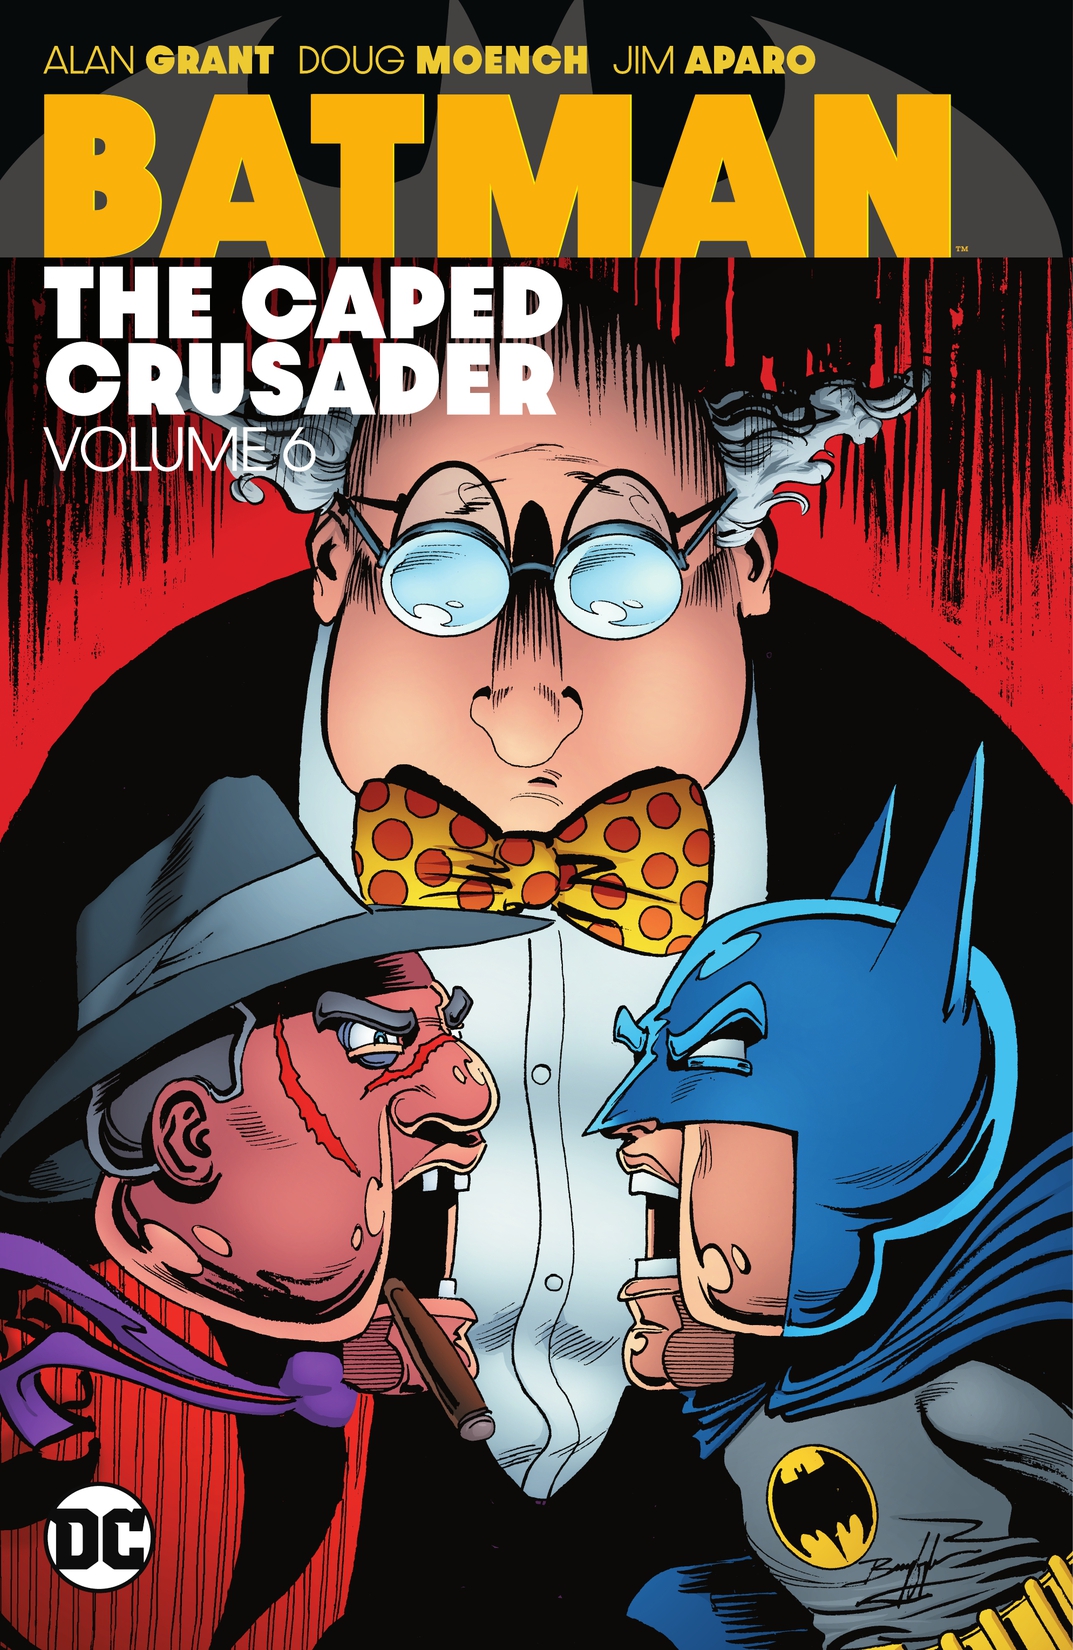 Batman: The Caped Crusader Vol. 6 preview images